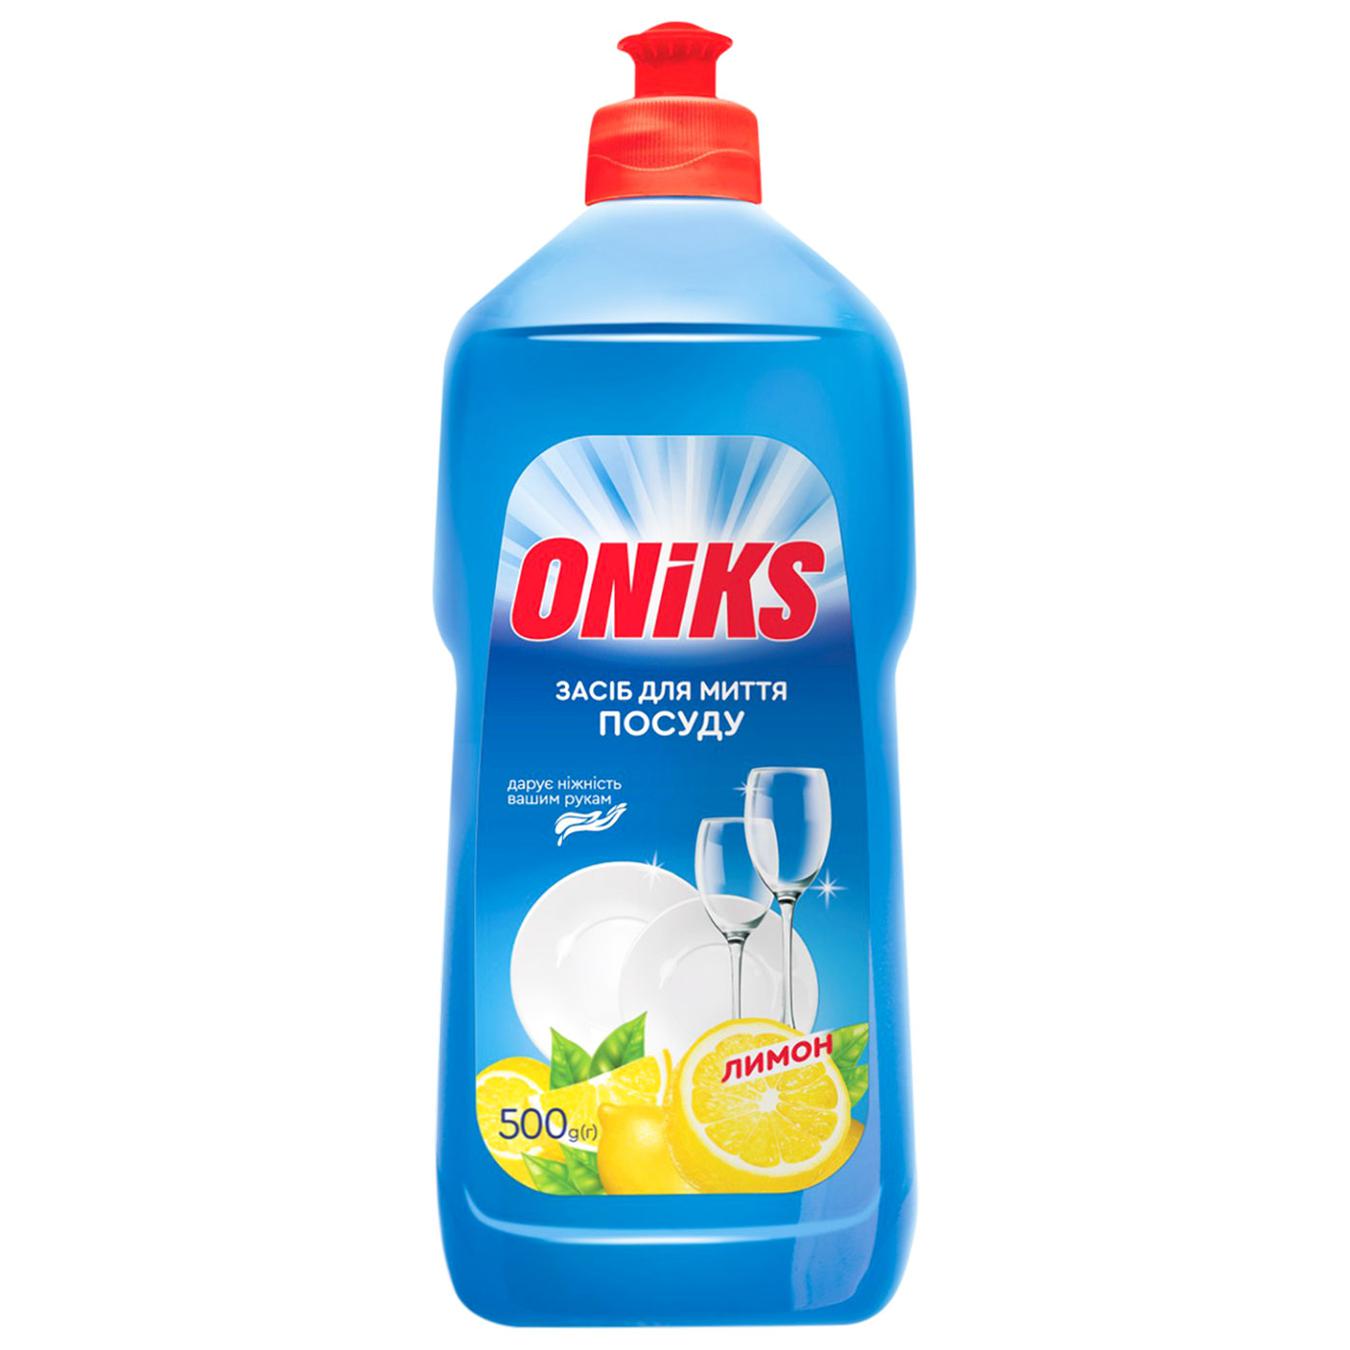 Dishwashing detergent Oniks lemon 500 ml